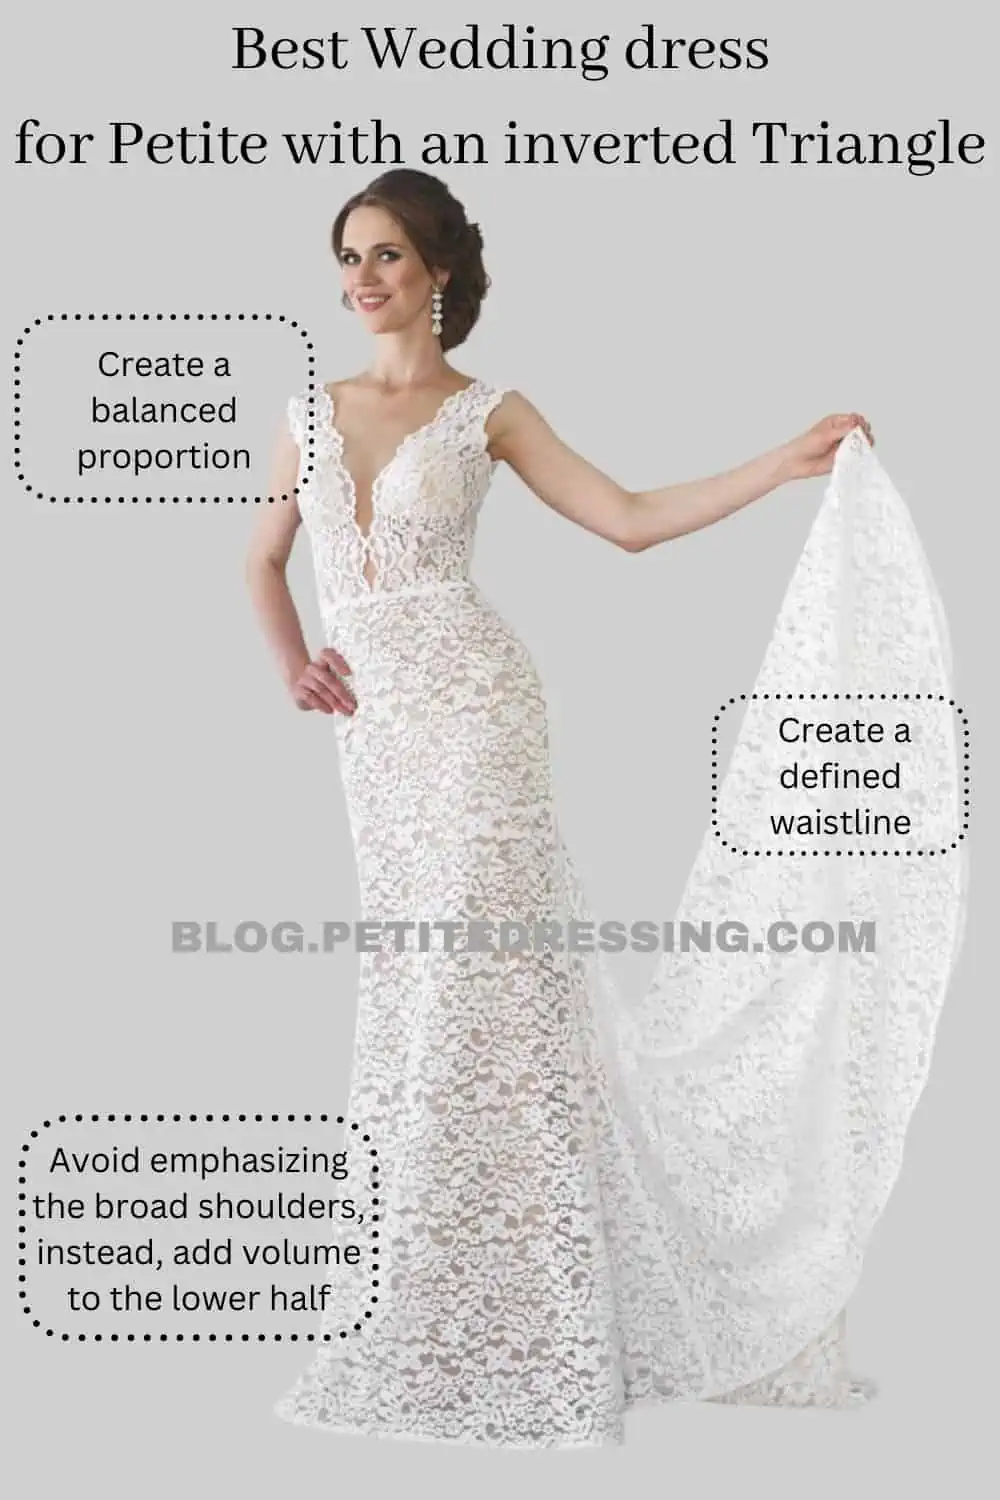 Wedding Dress Guide For Petite Inverted Triangle Shape - Petite